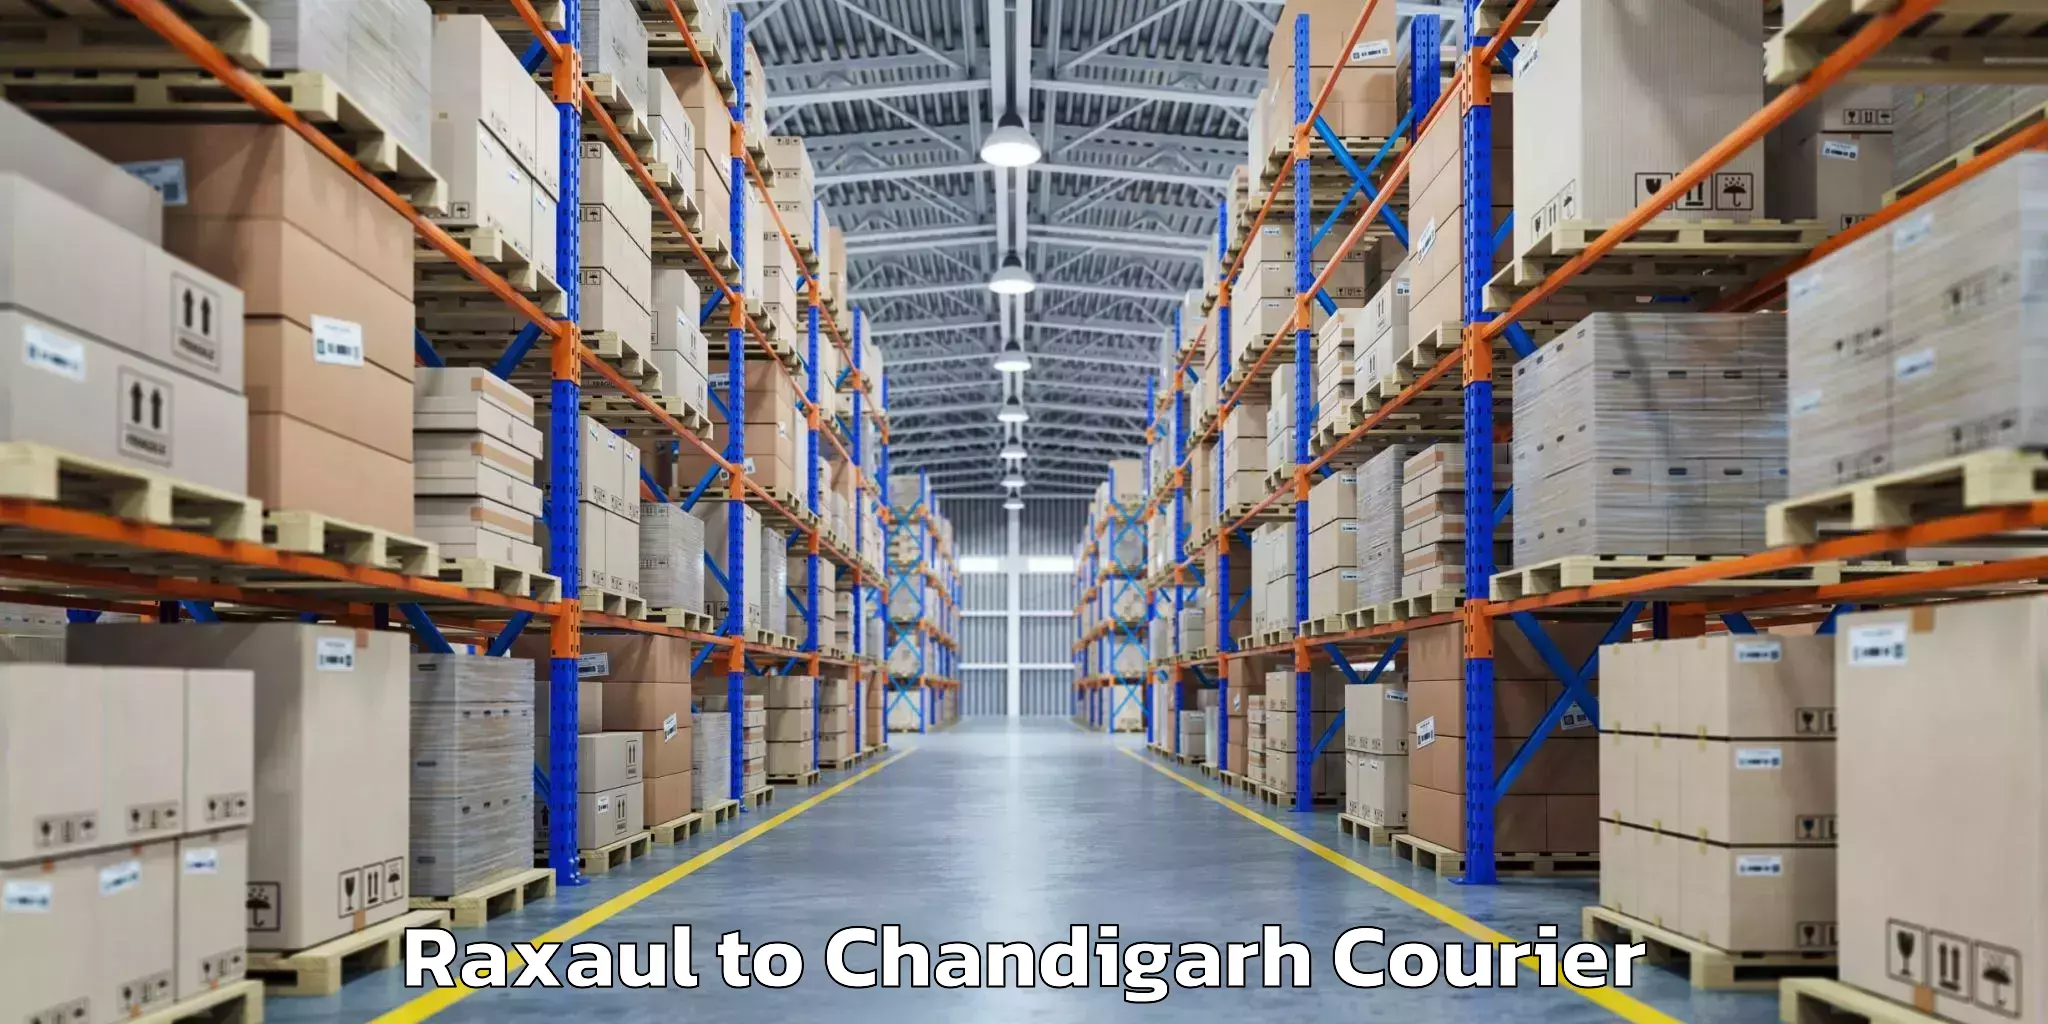 Luggage shipment specialists Raxaul to Chandigarh